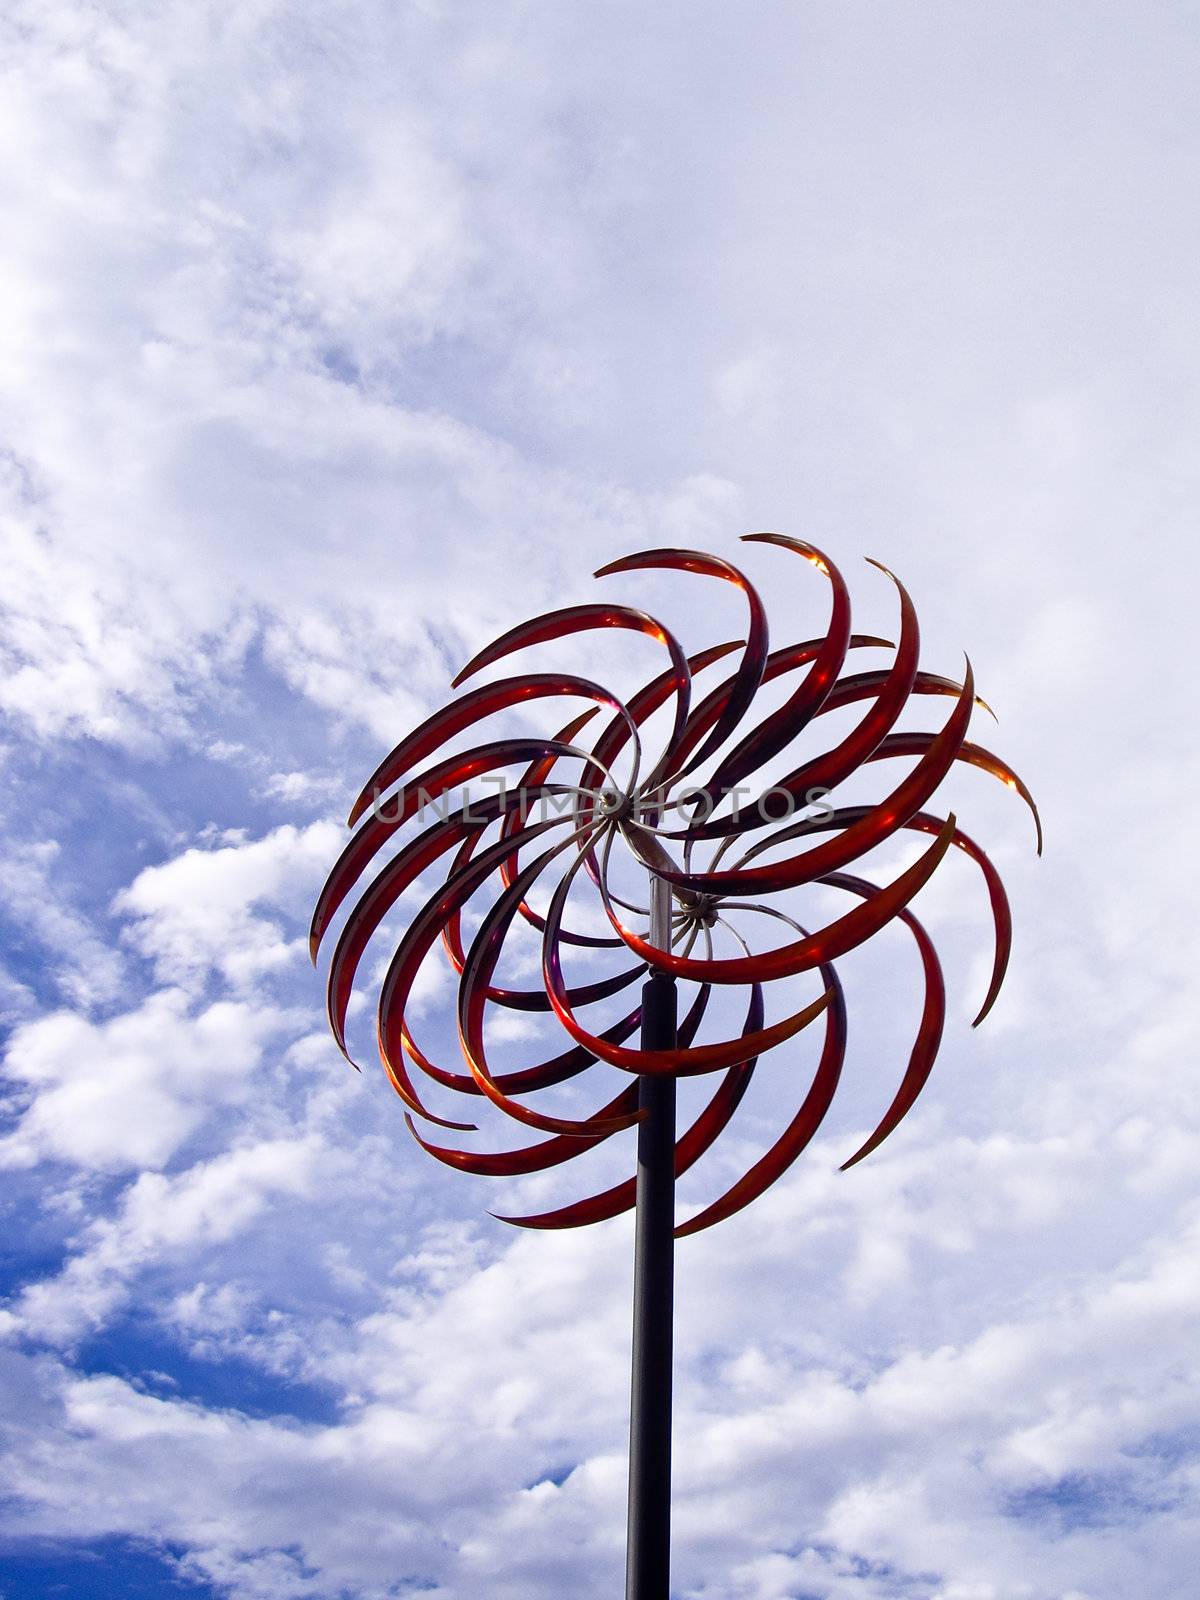 Artistic wind power by emattil